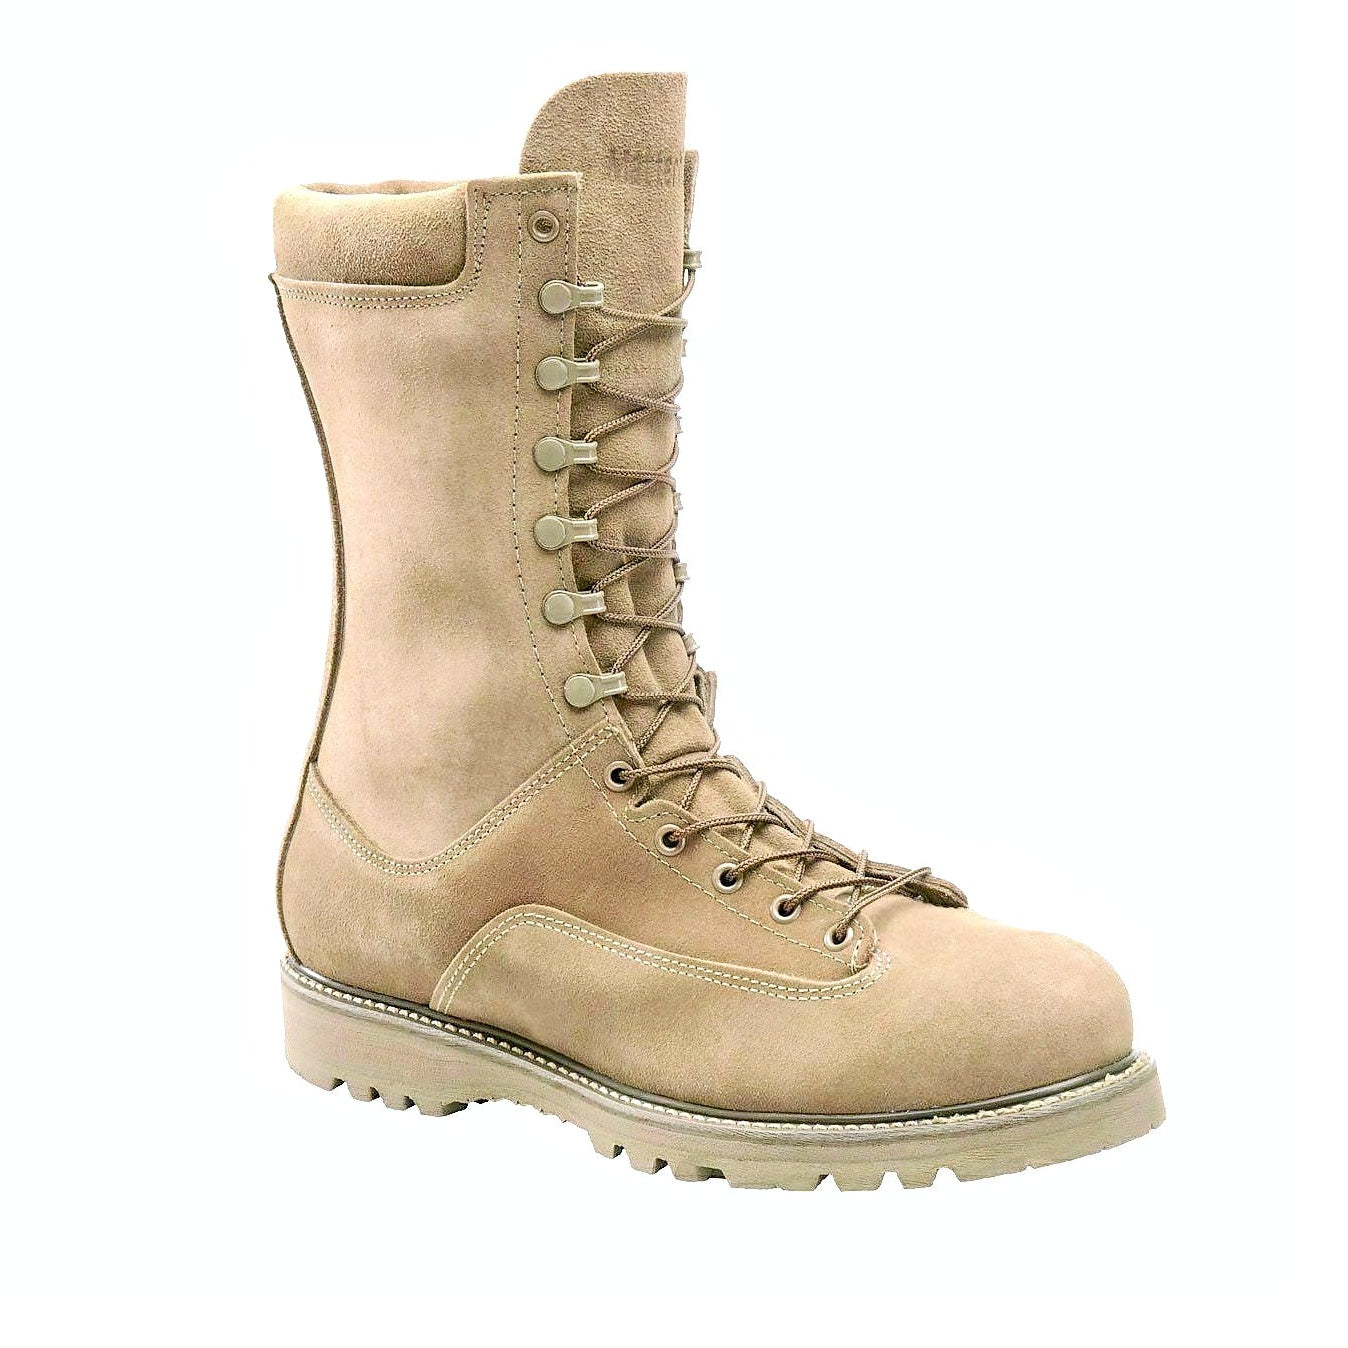 Men's Safety Toe Insulated Waterproof Work Boots Matterhorn 4402494  Uniform Trading Company